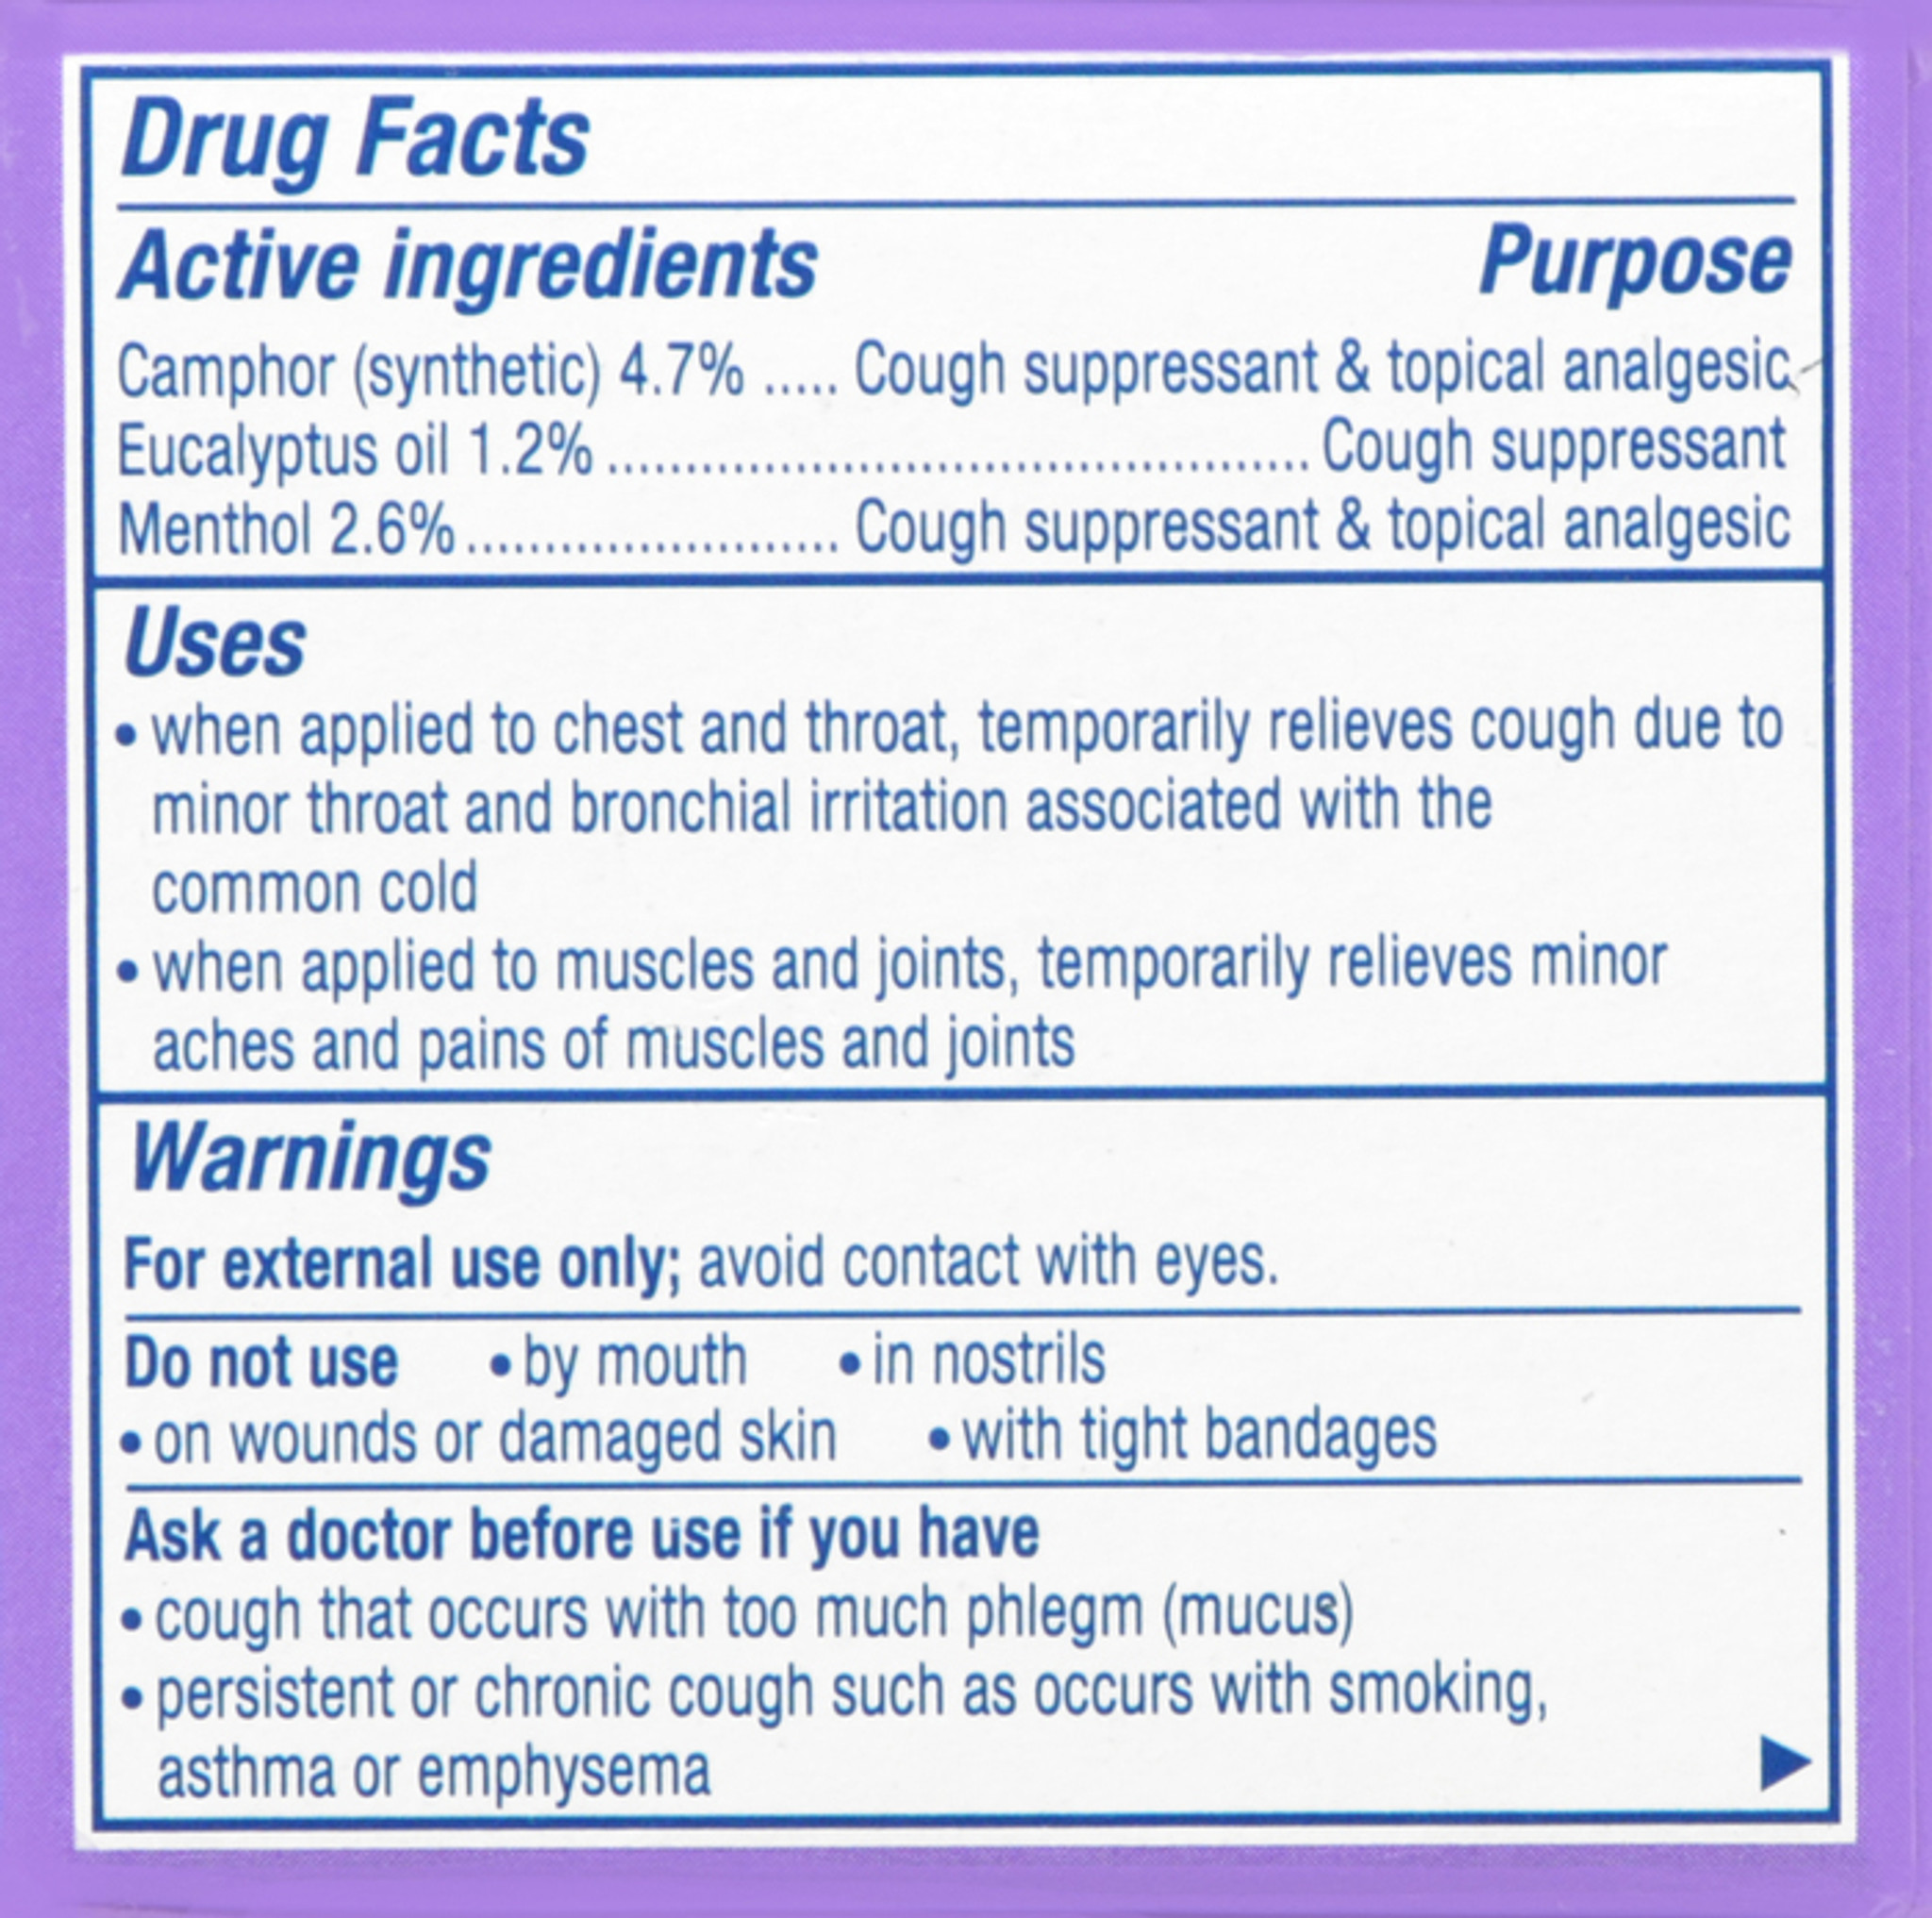 Vicks® VapoRub Cough Suppressant Topical Analgesic Ointment Original- 1.76oz